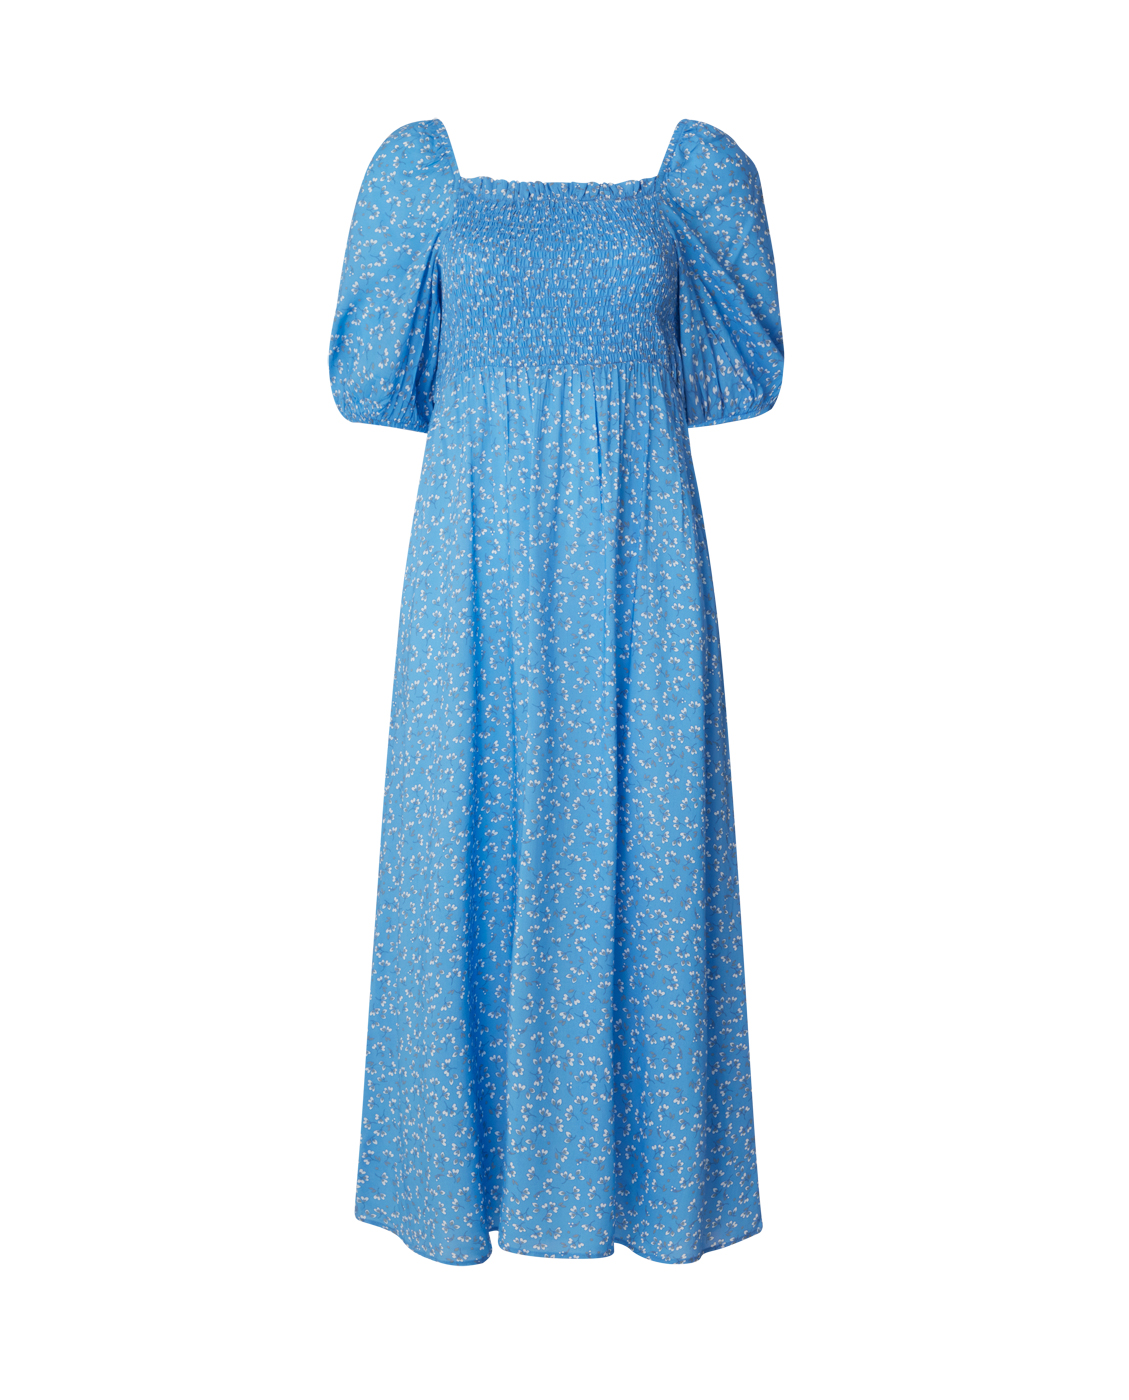 Alaia Printed Dress